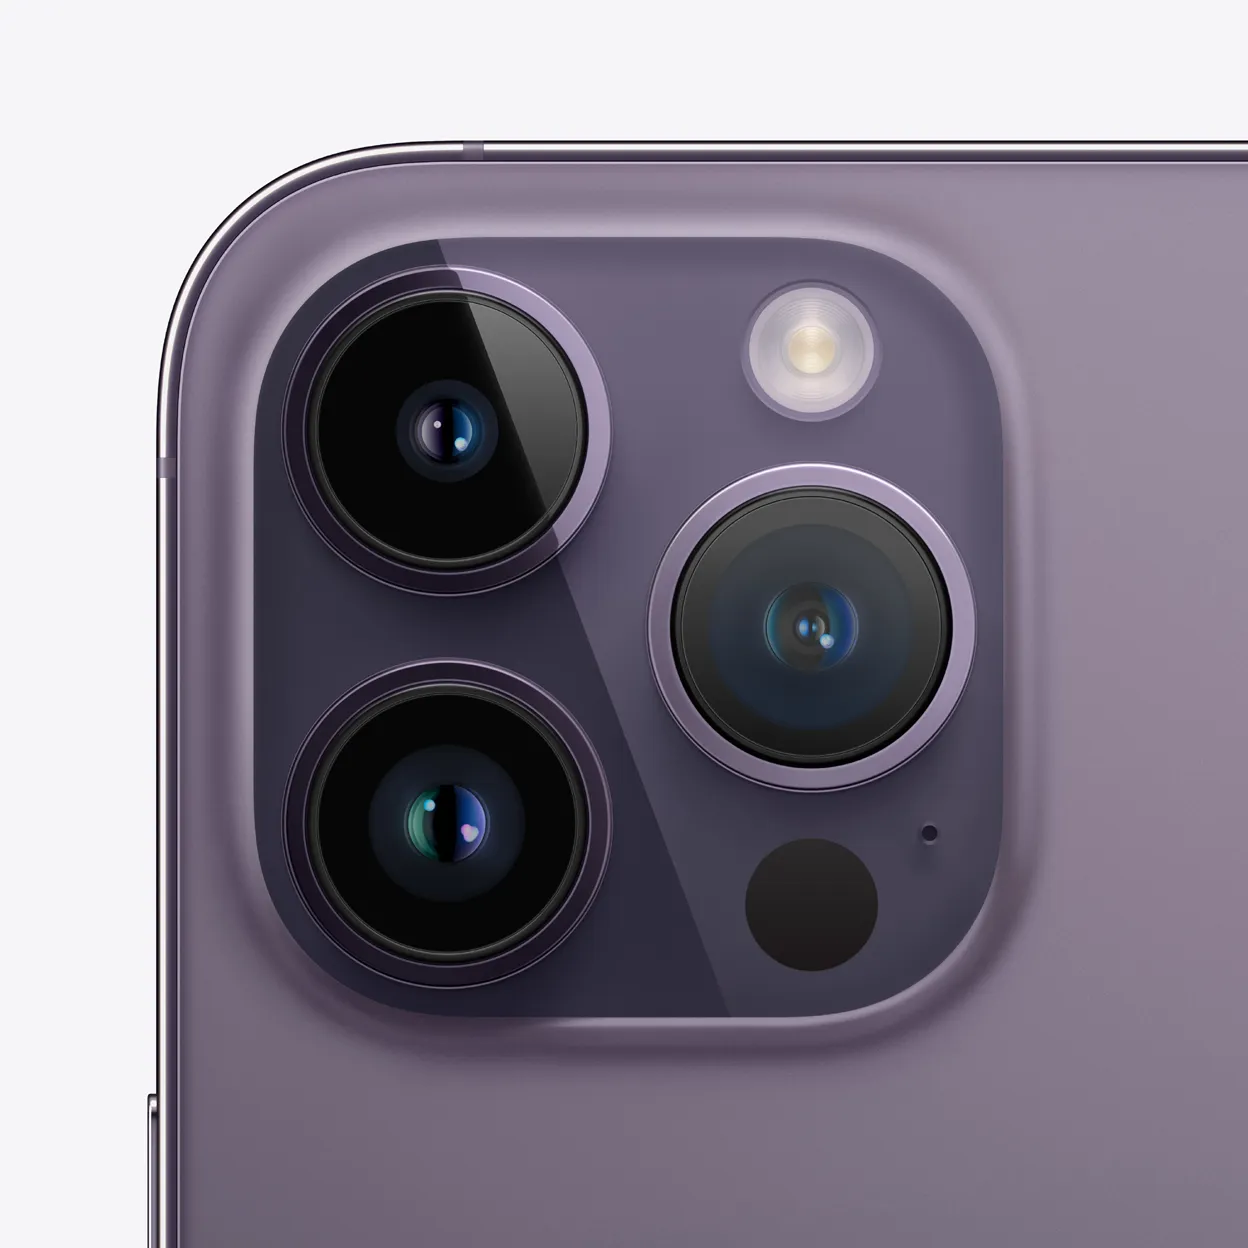 Apple iPhone 14 Pro Max (512GB) – Deep Purple